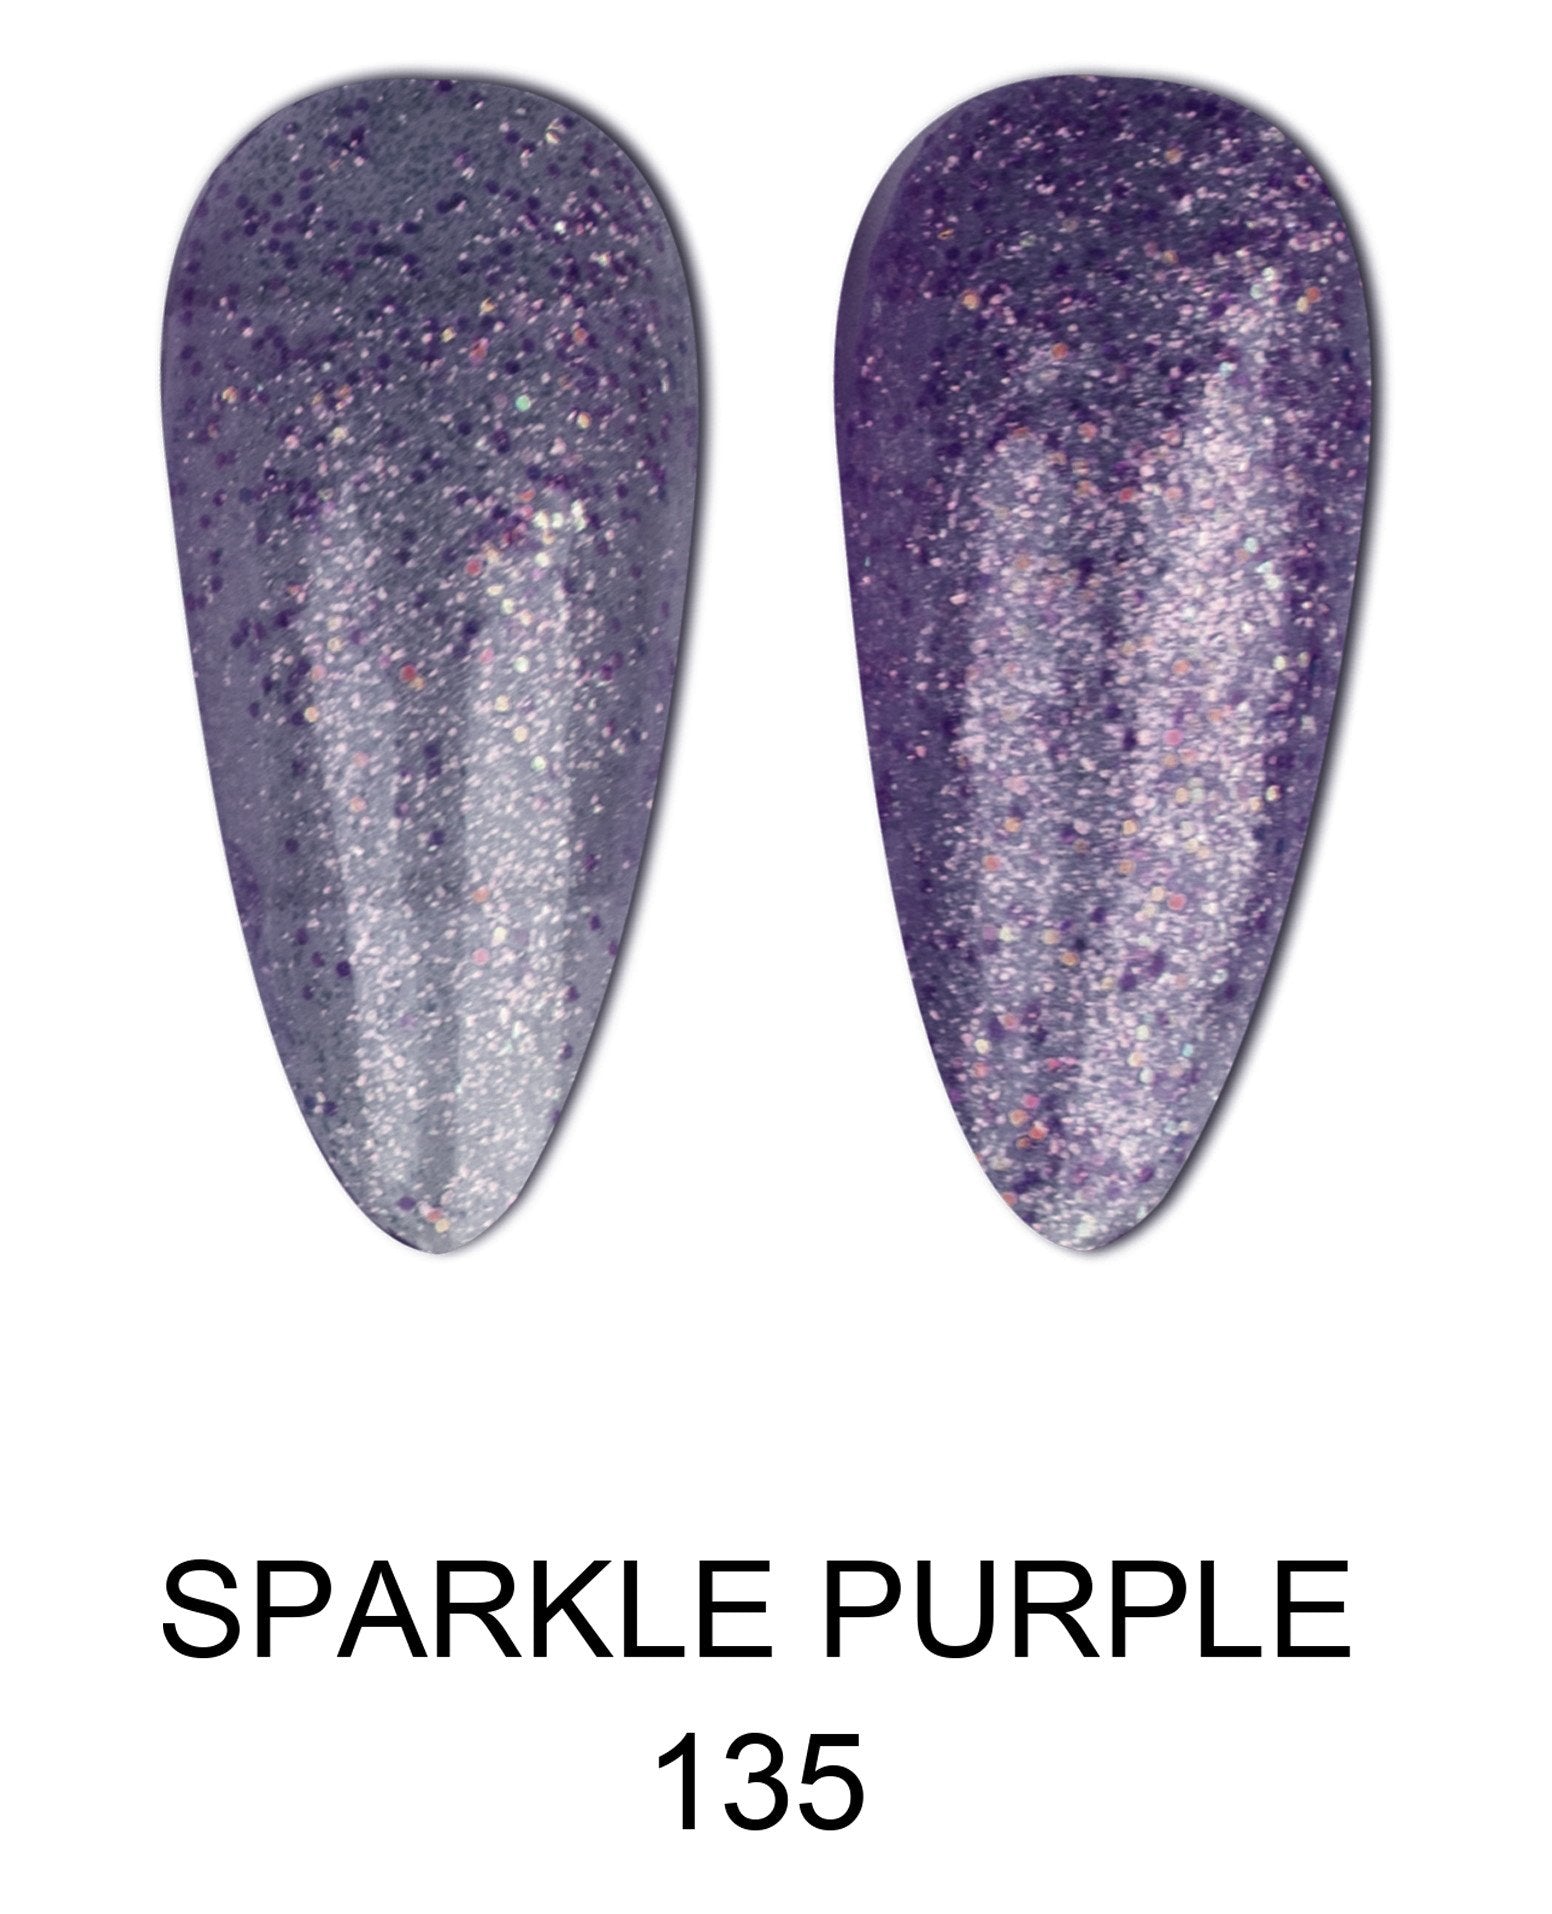 Claw Culture 135 Summer Sparkle Purple Limited Edition Gel Polish